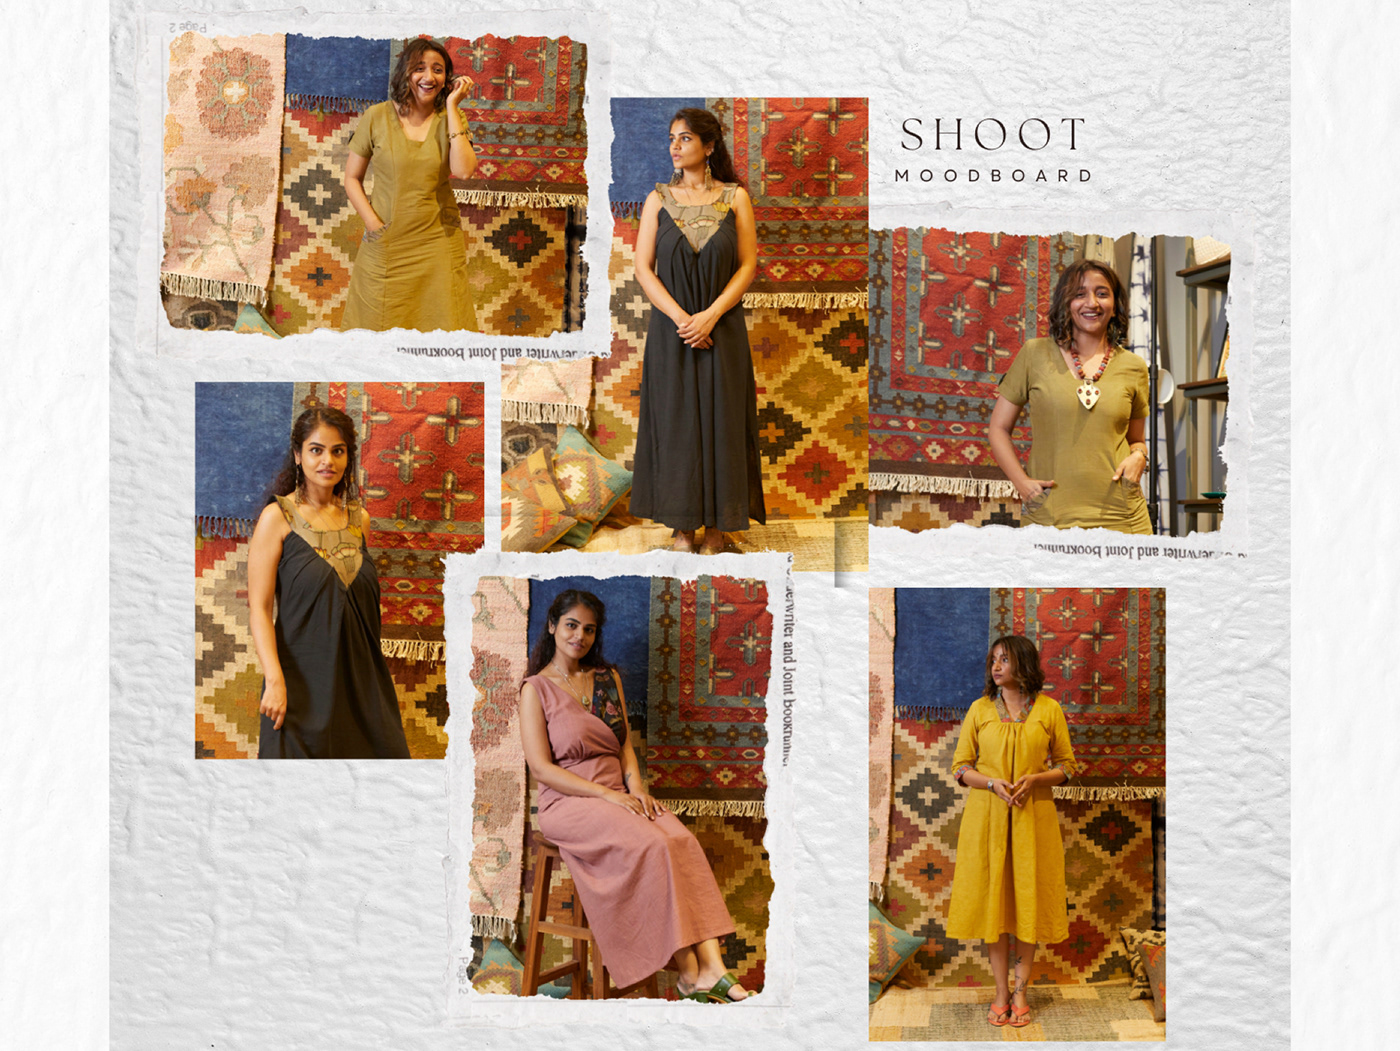 Sustainable Fashion green fashion indian textile artisanal work brand collection 